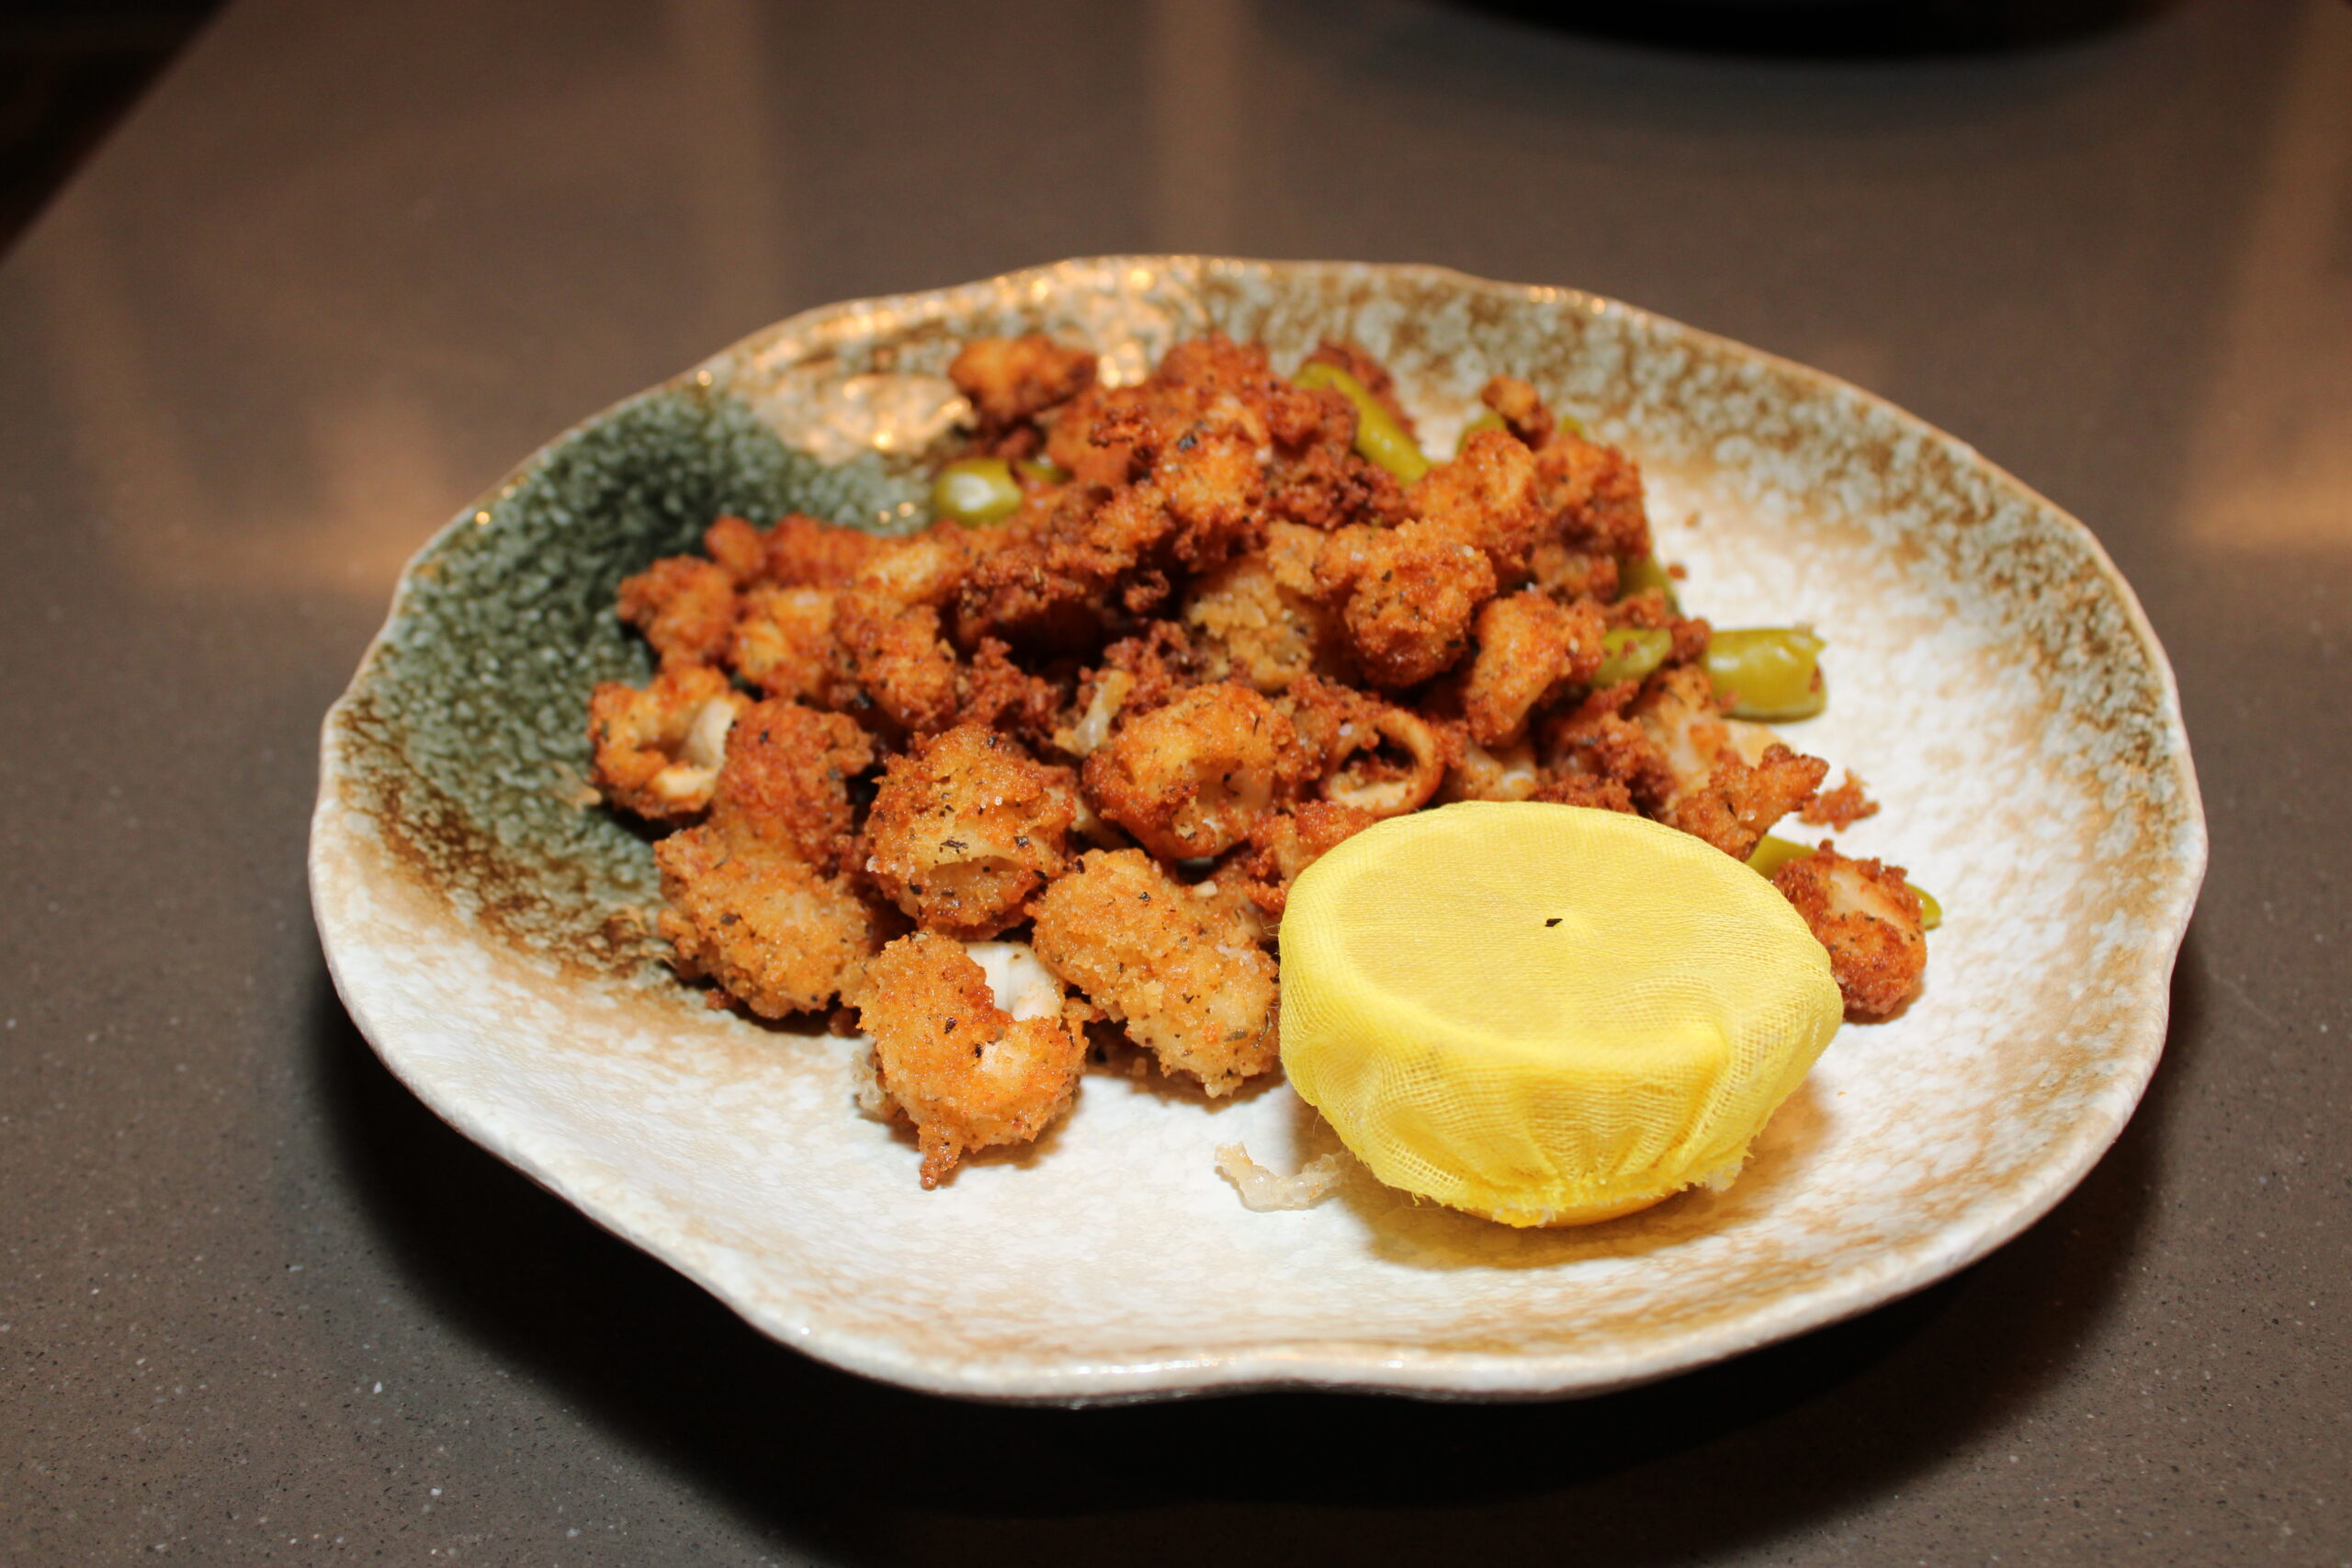 Image shows a plate of fried calamari with half a lemon